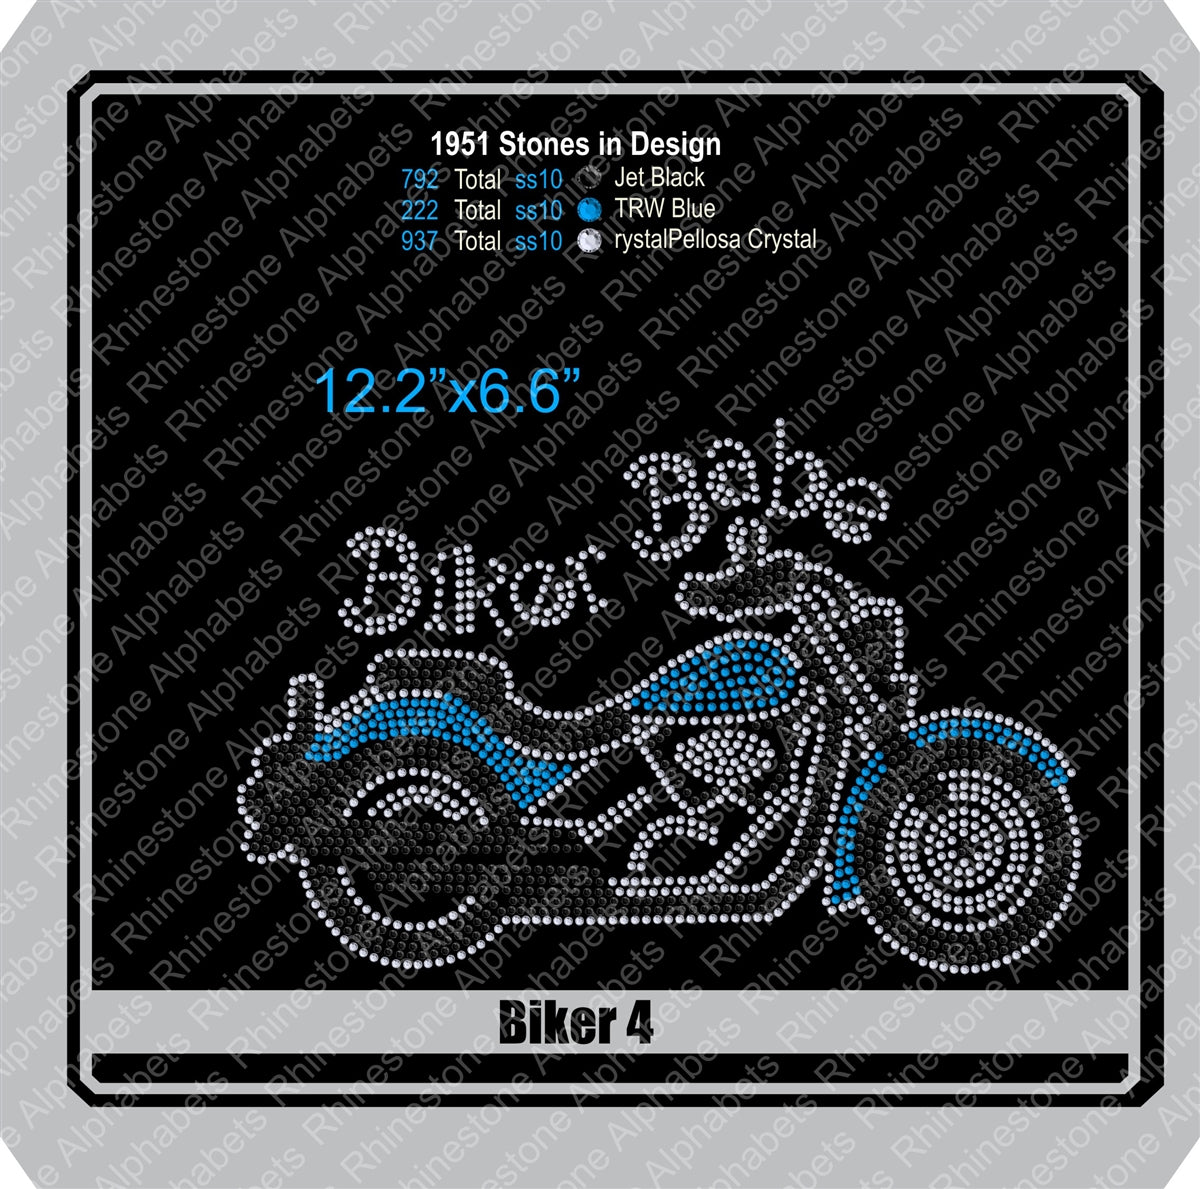 Biker1234 ,TTF Rhinestone Fonts & Rhinestone Designs